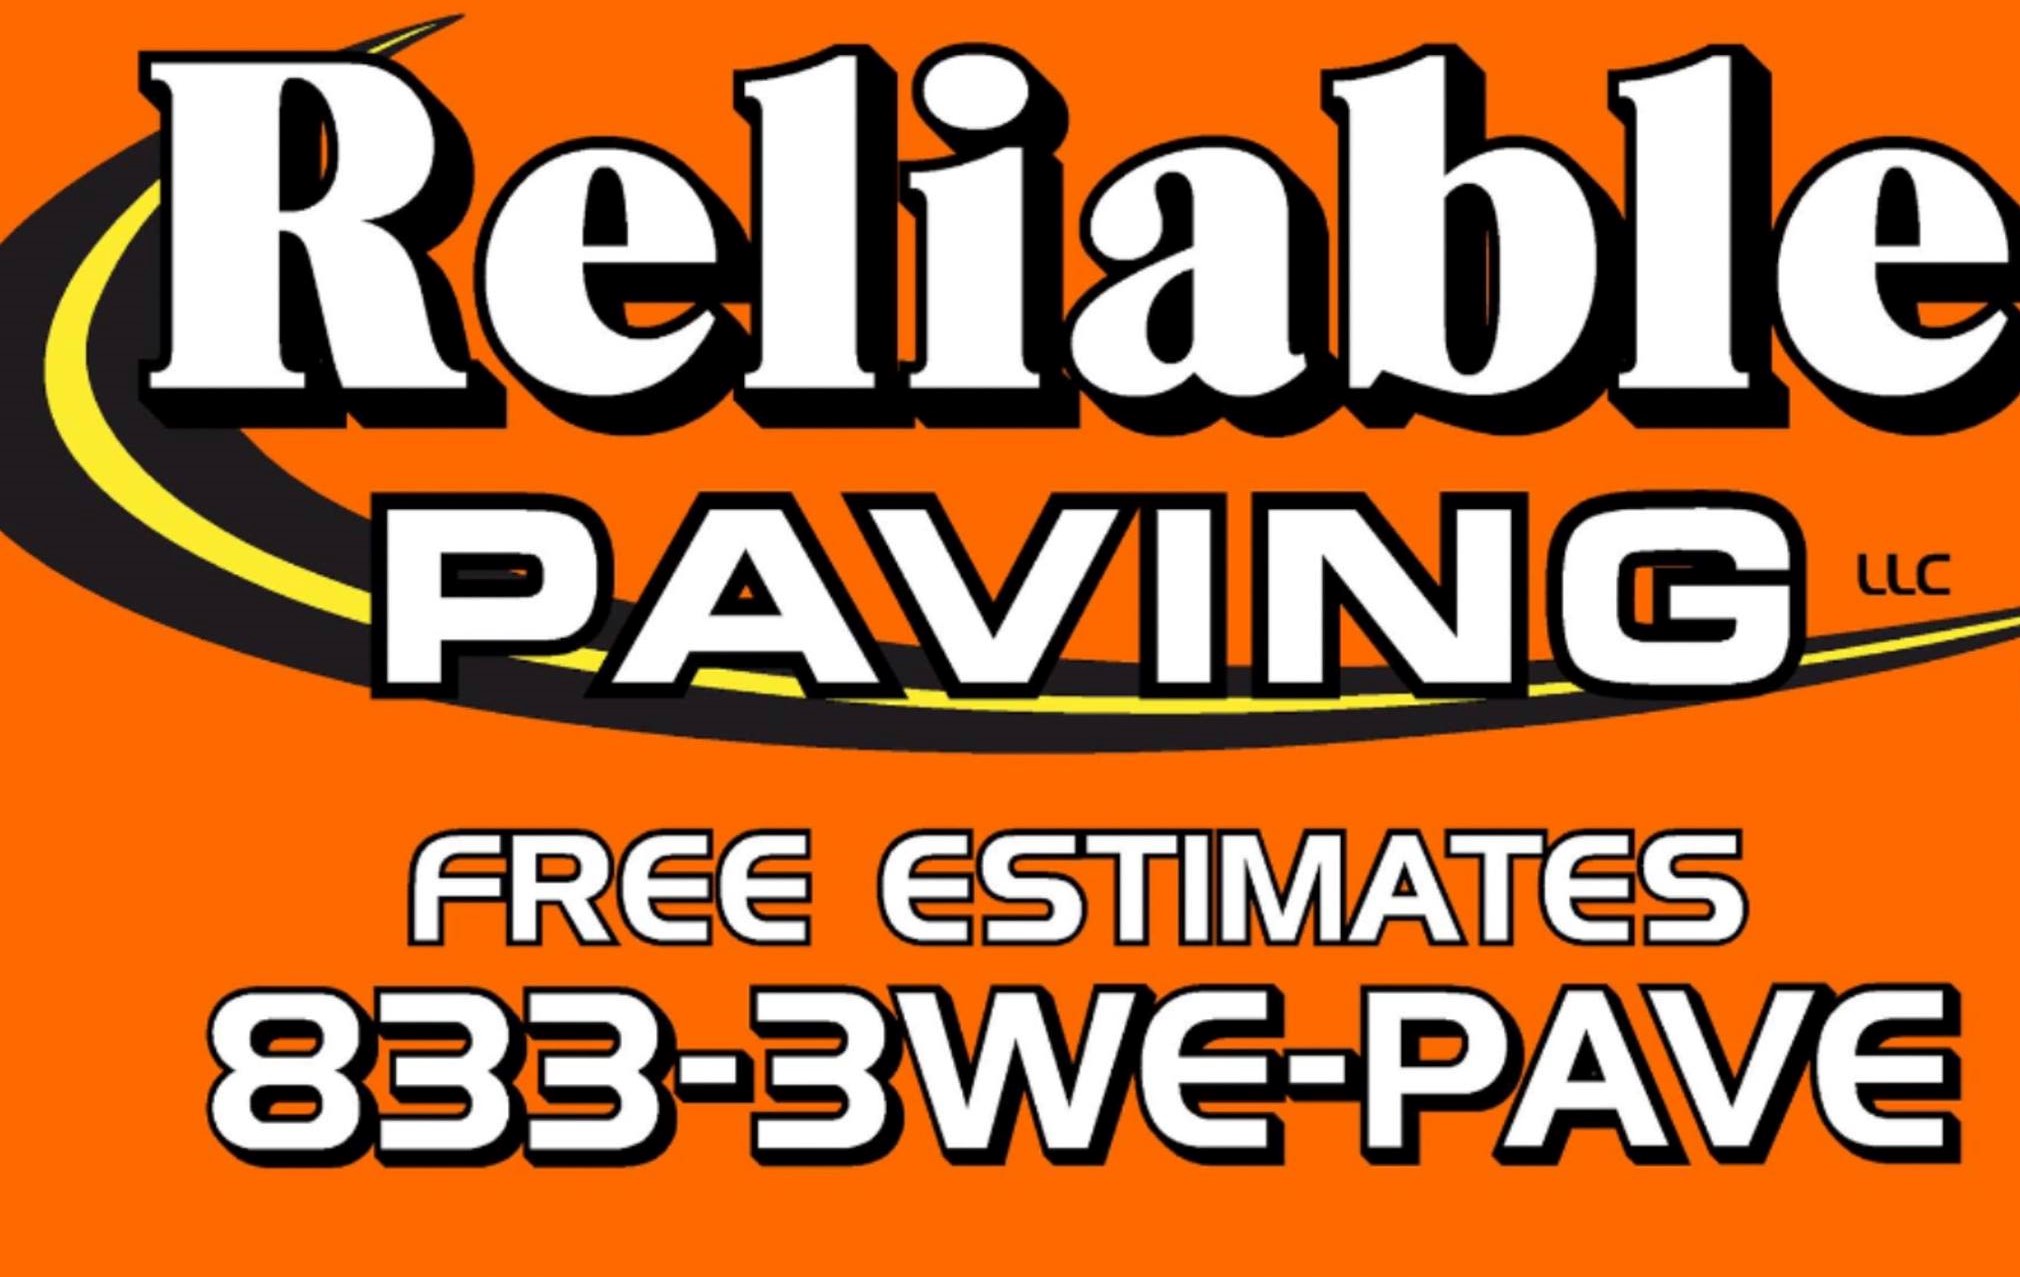 Reliable Paving, LLC